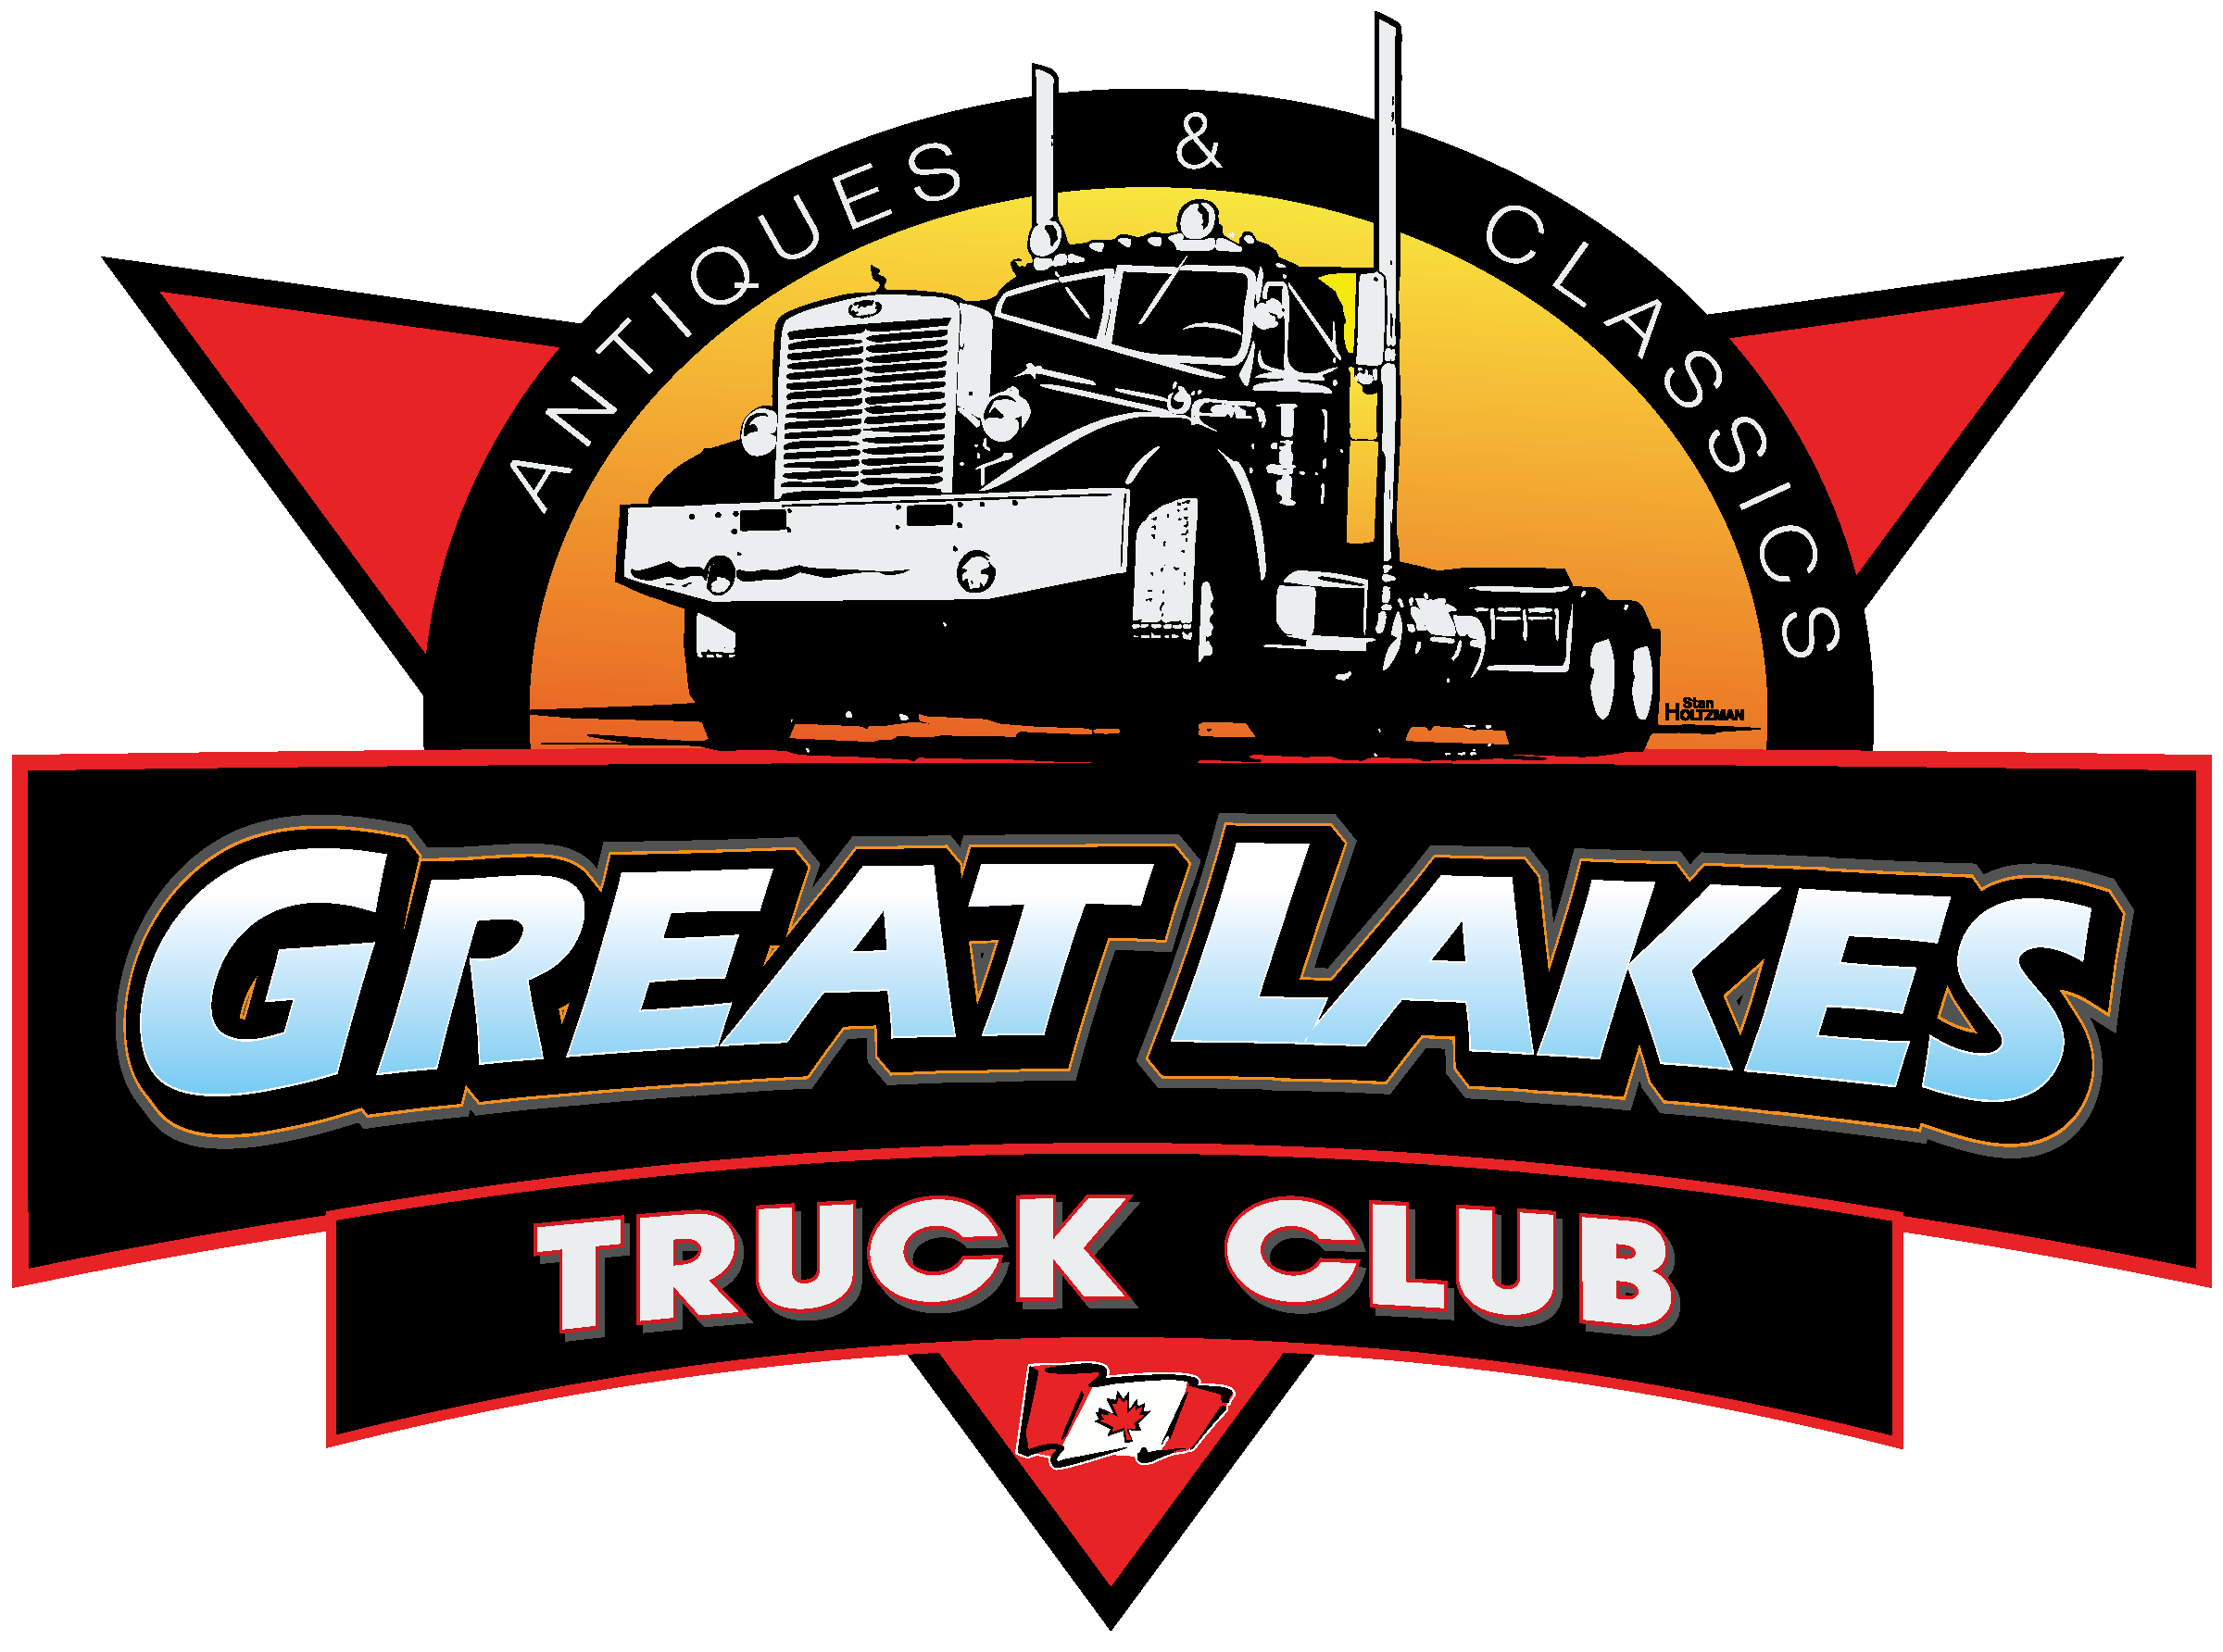 Car and Truck Club Logo - Great Lakes Truck Club